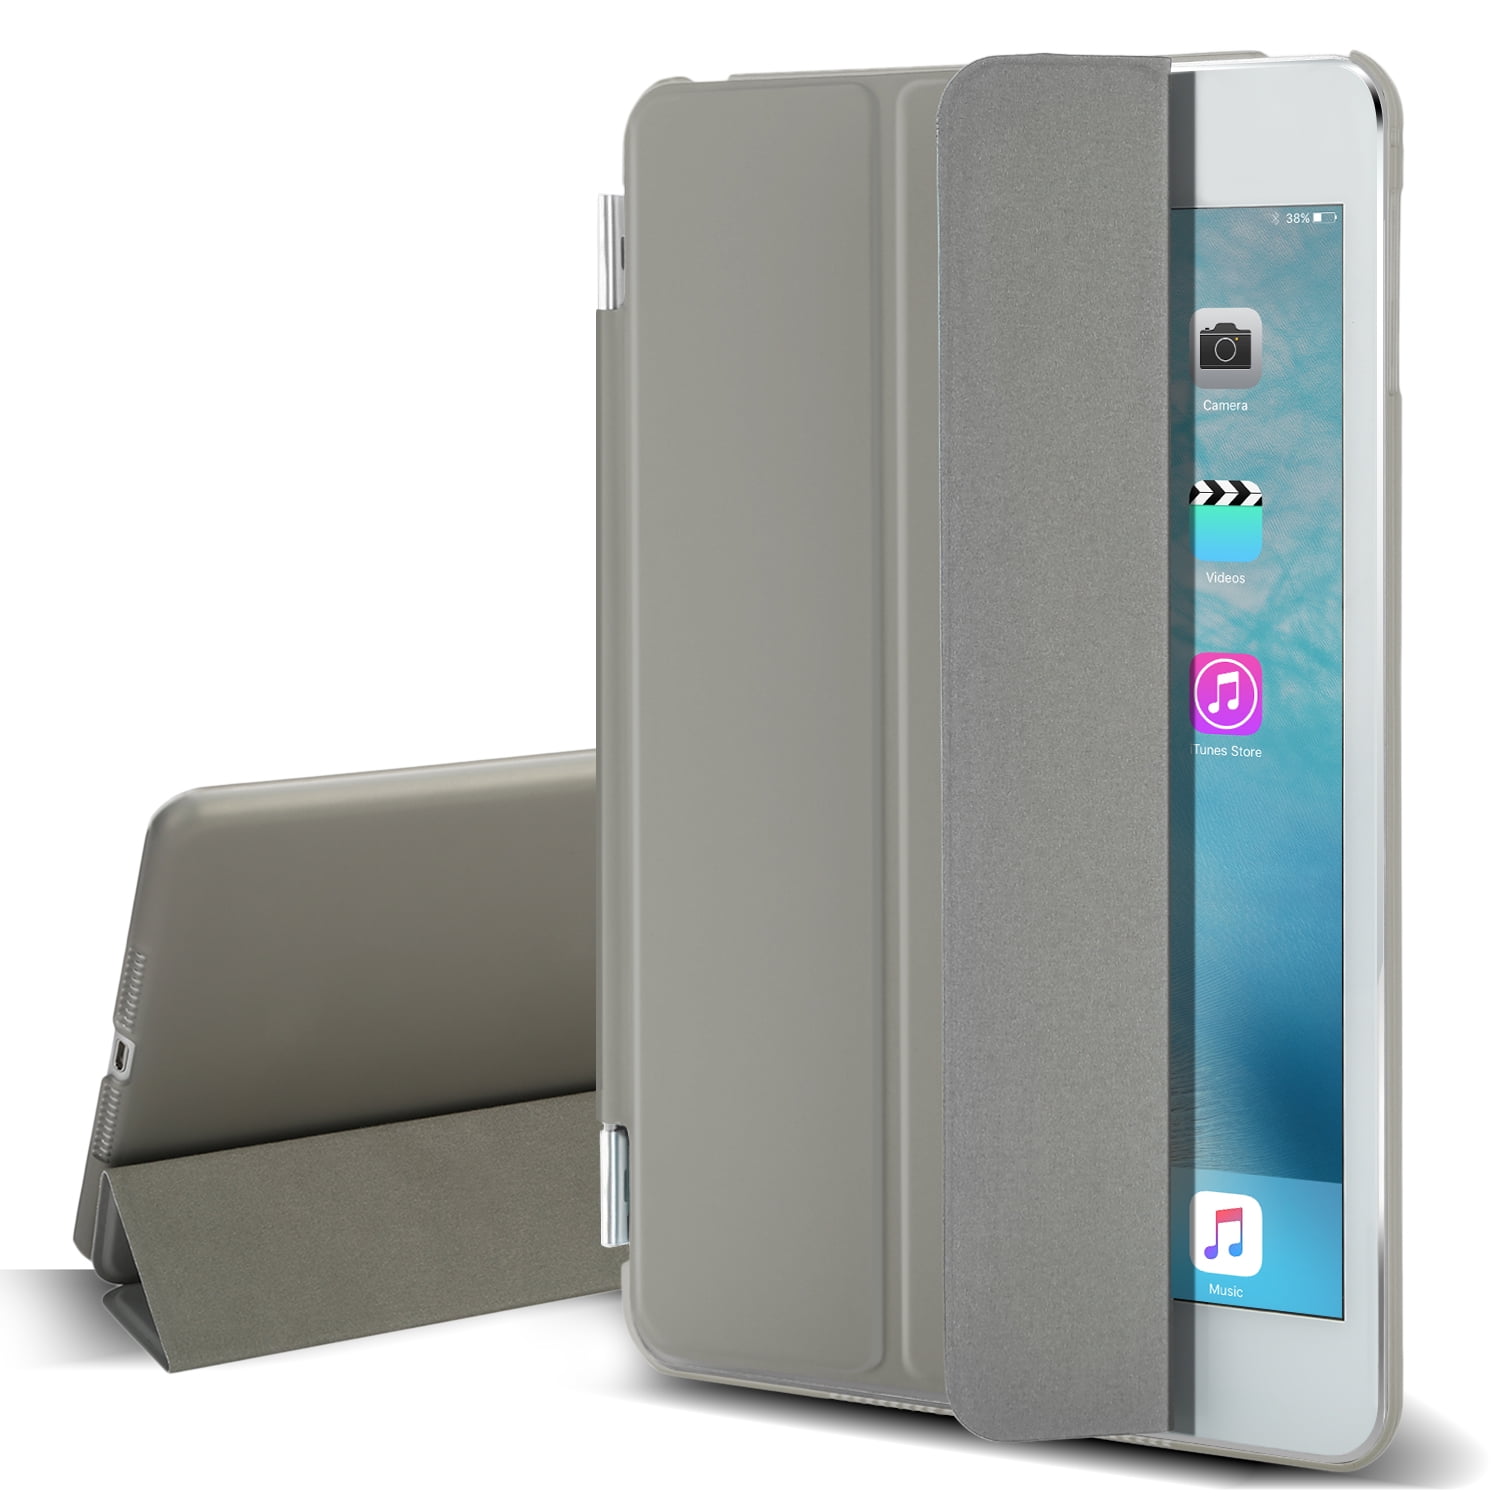 Tkoofn Ipad Mini 4 Case Au Slim Smart Magnetic Leather Stand Cover Back Case For Apple Ipad Mini 4 A1538 A1550 Walmart Com Walmart Com